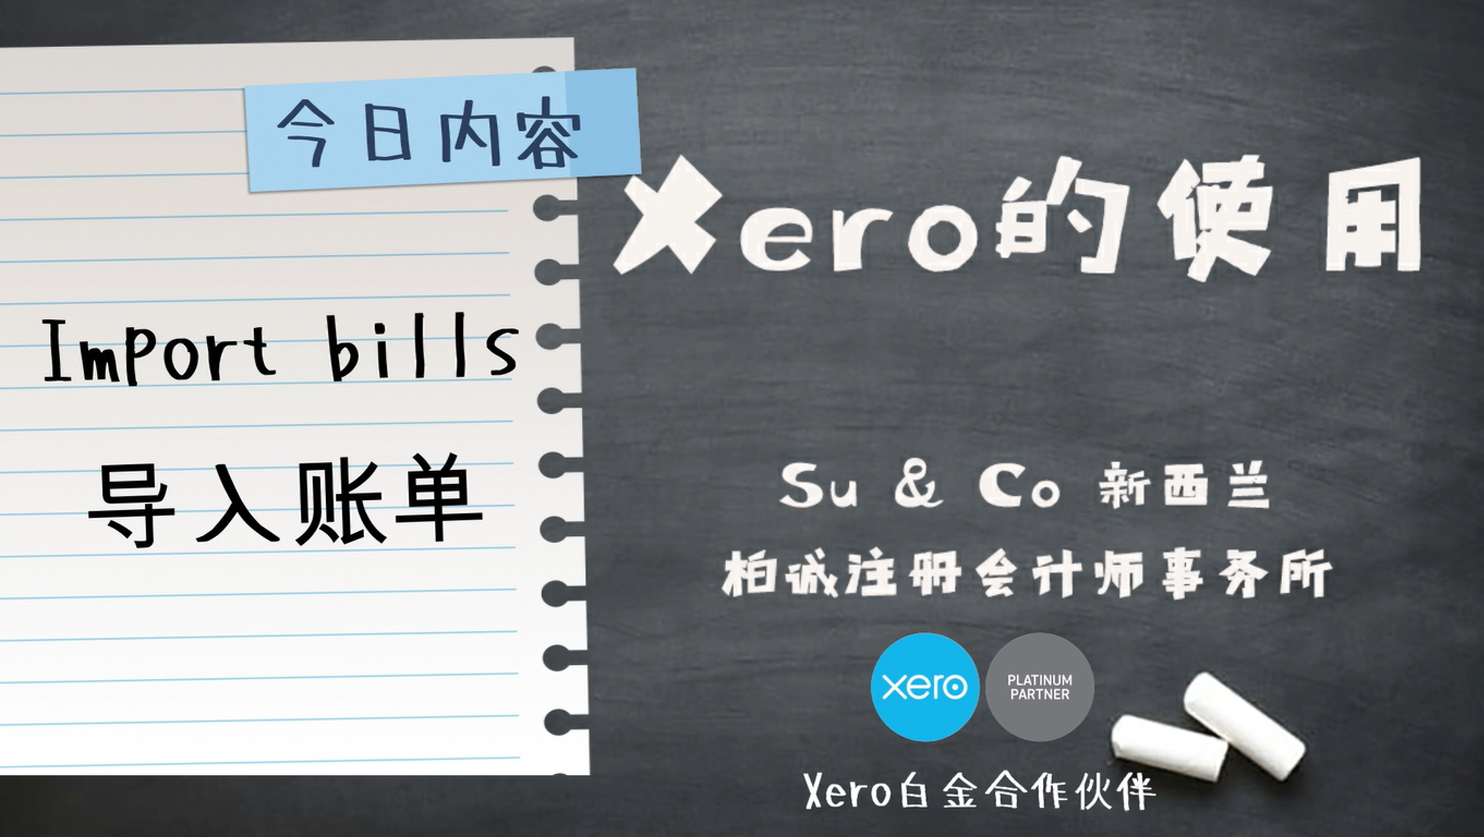 Xero的使用教程 - Import bills 导入账单